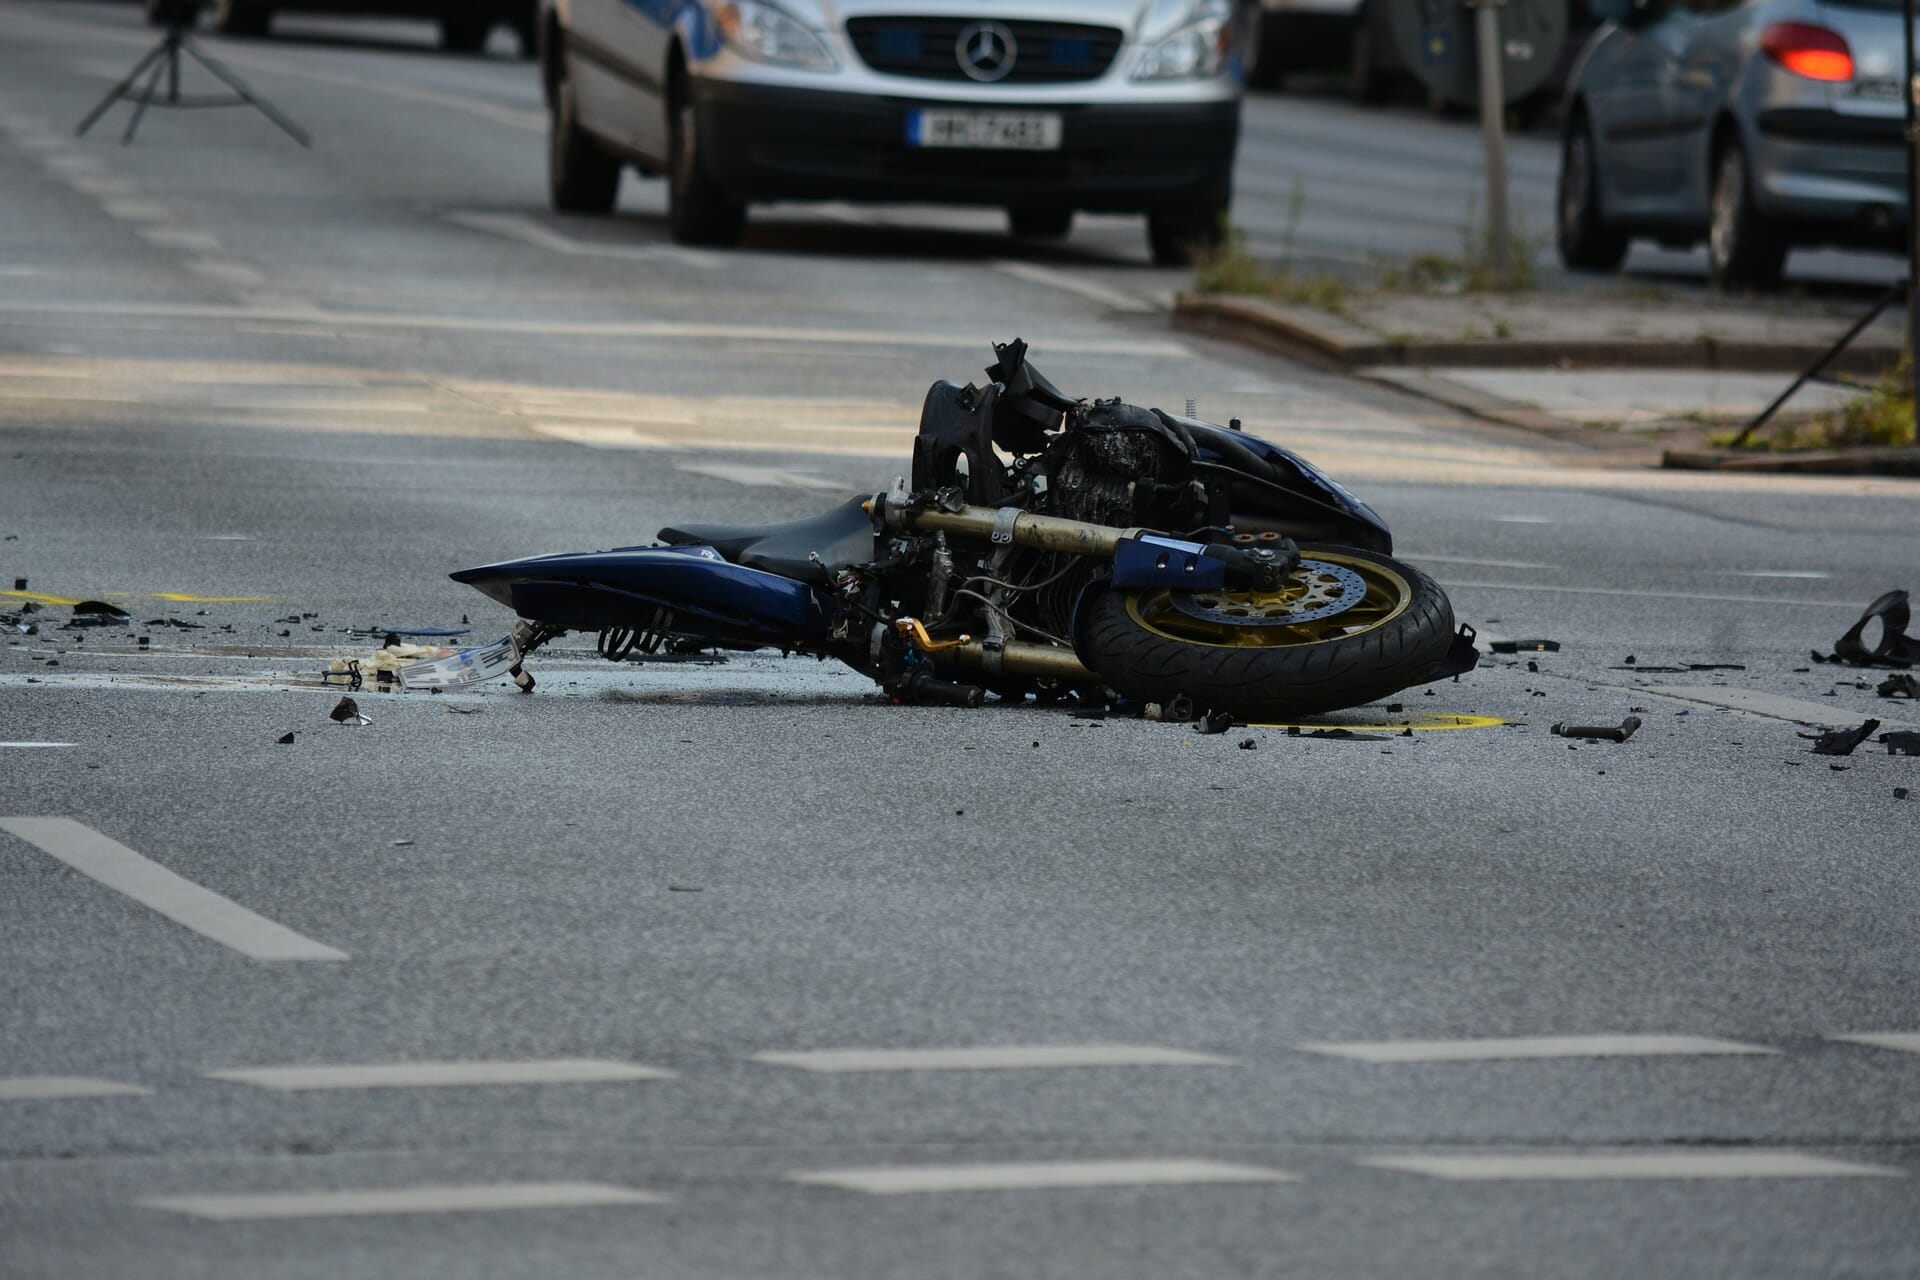 motorcycle accident houston yesterday